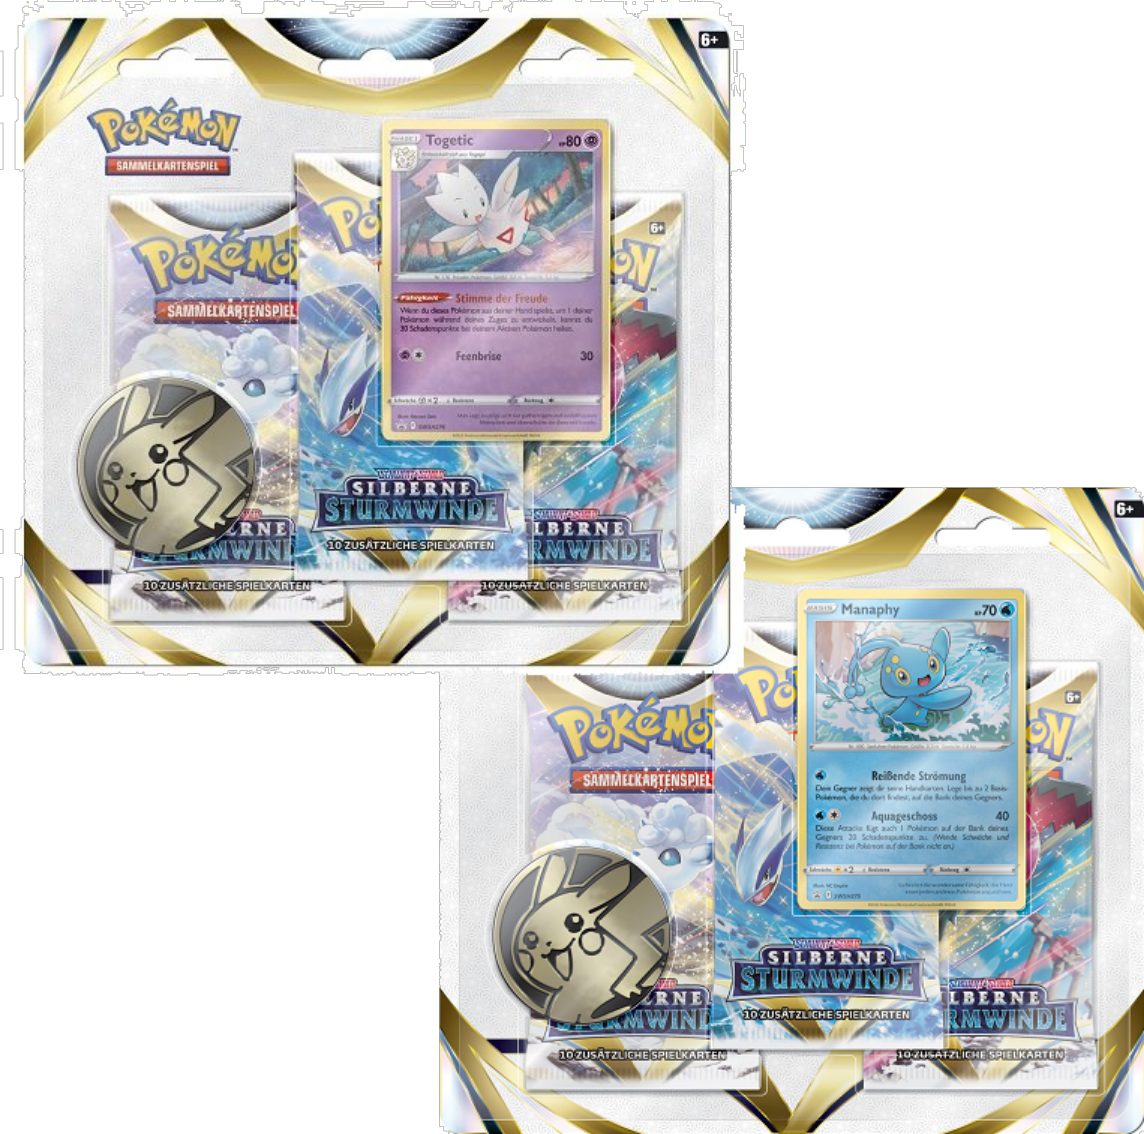 The Pokémon Company International Sammelkarte Pokémon - Silberne Sturmwinde Blister (deutsch) 3 Boosterpacks, 1 zufällige Holo Promokarte